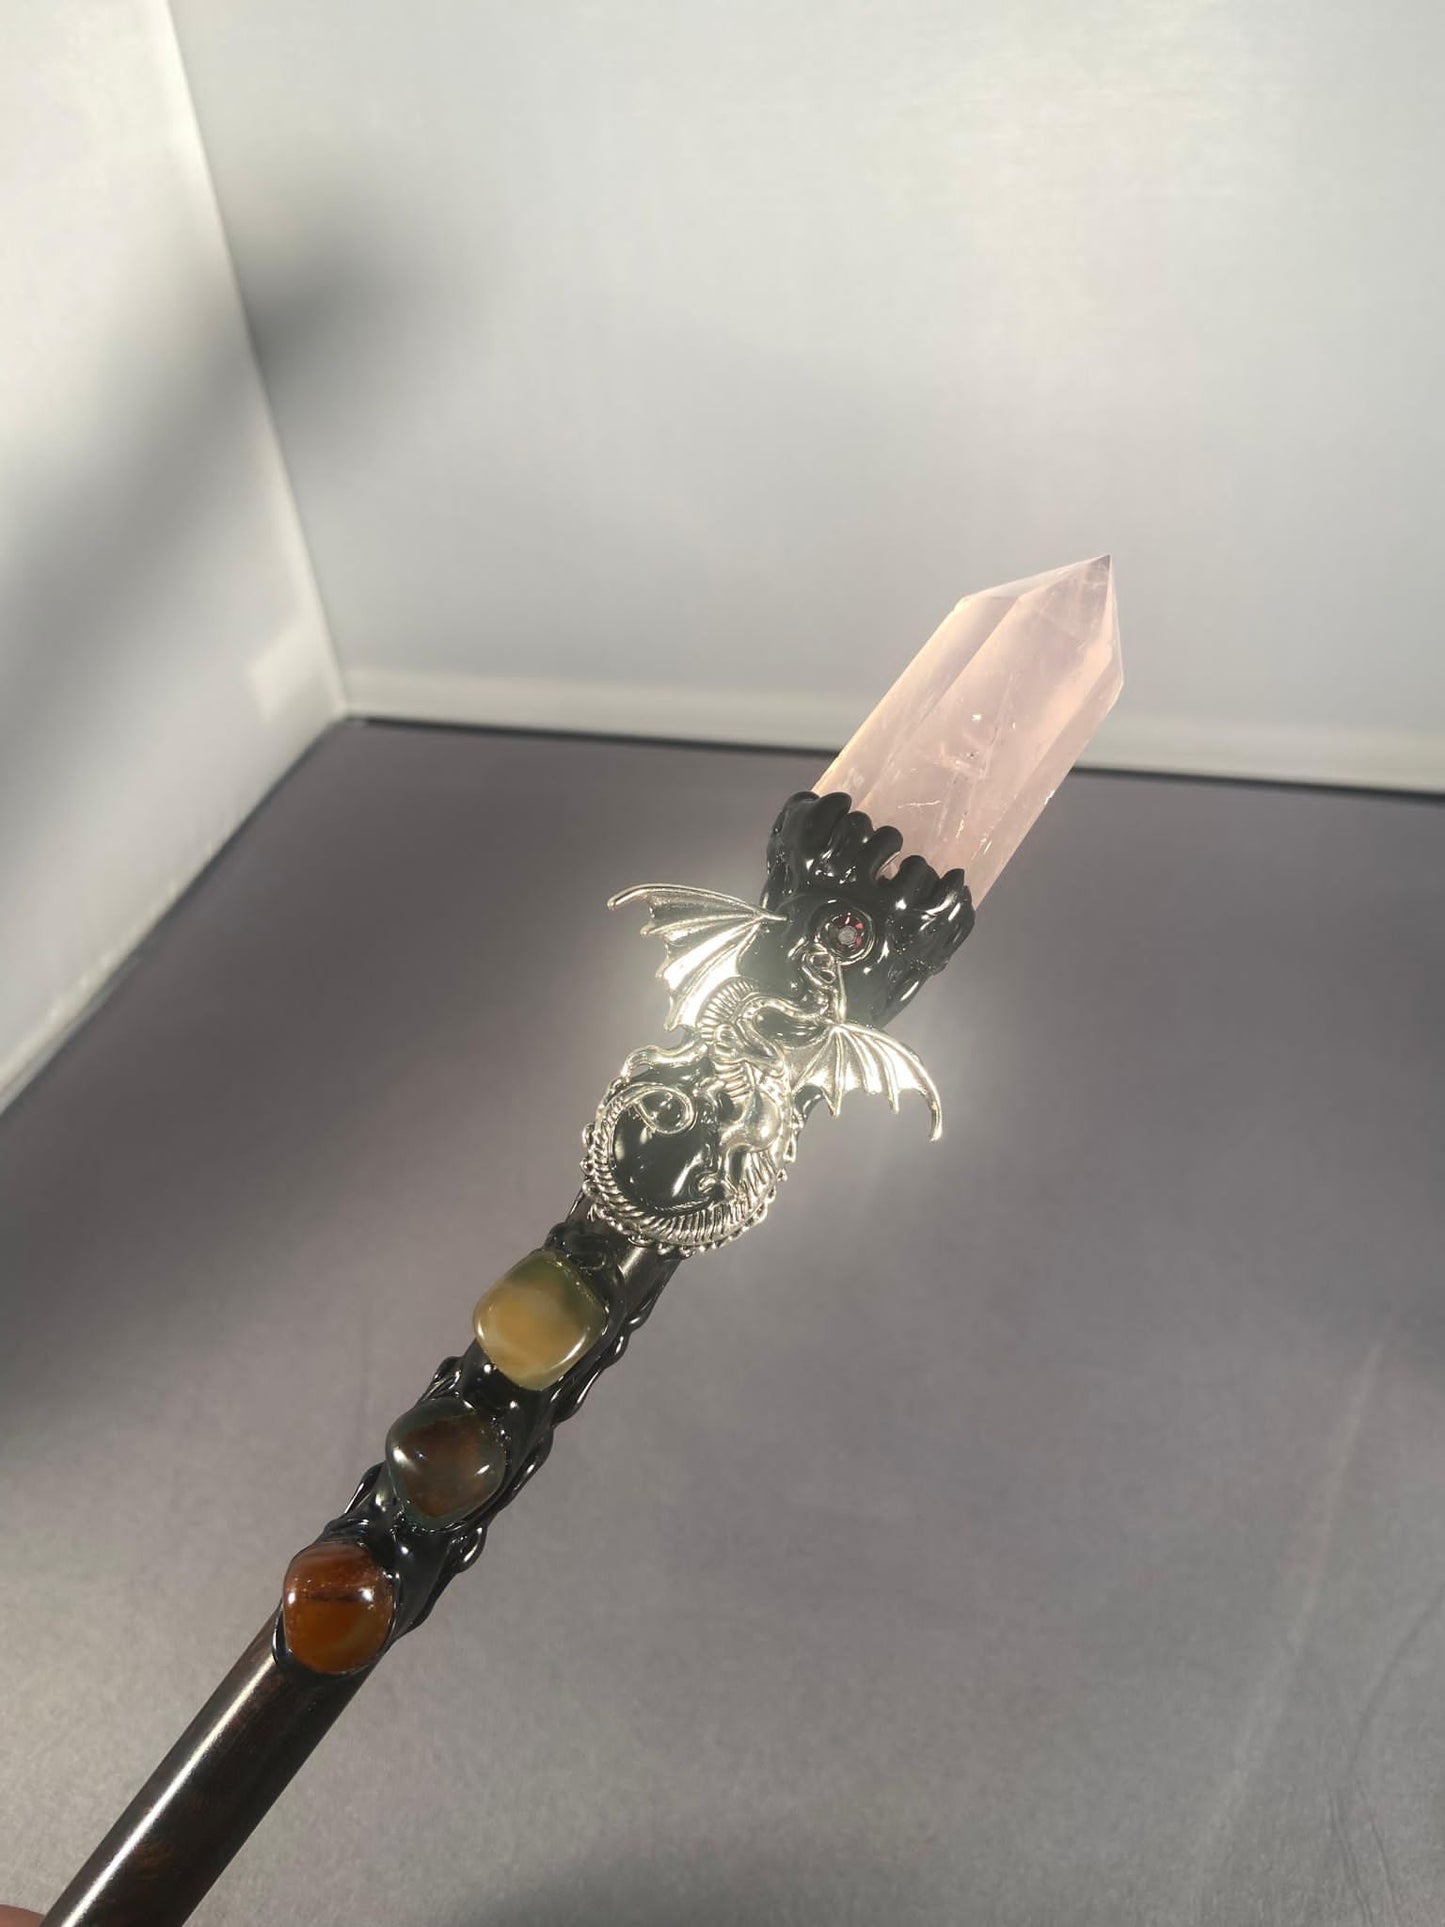 Crystal Magic wands